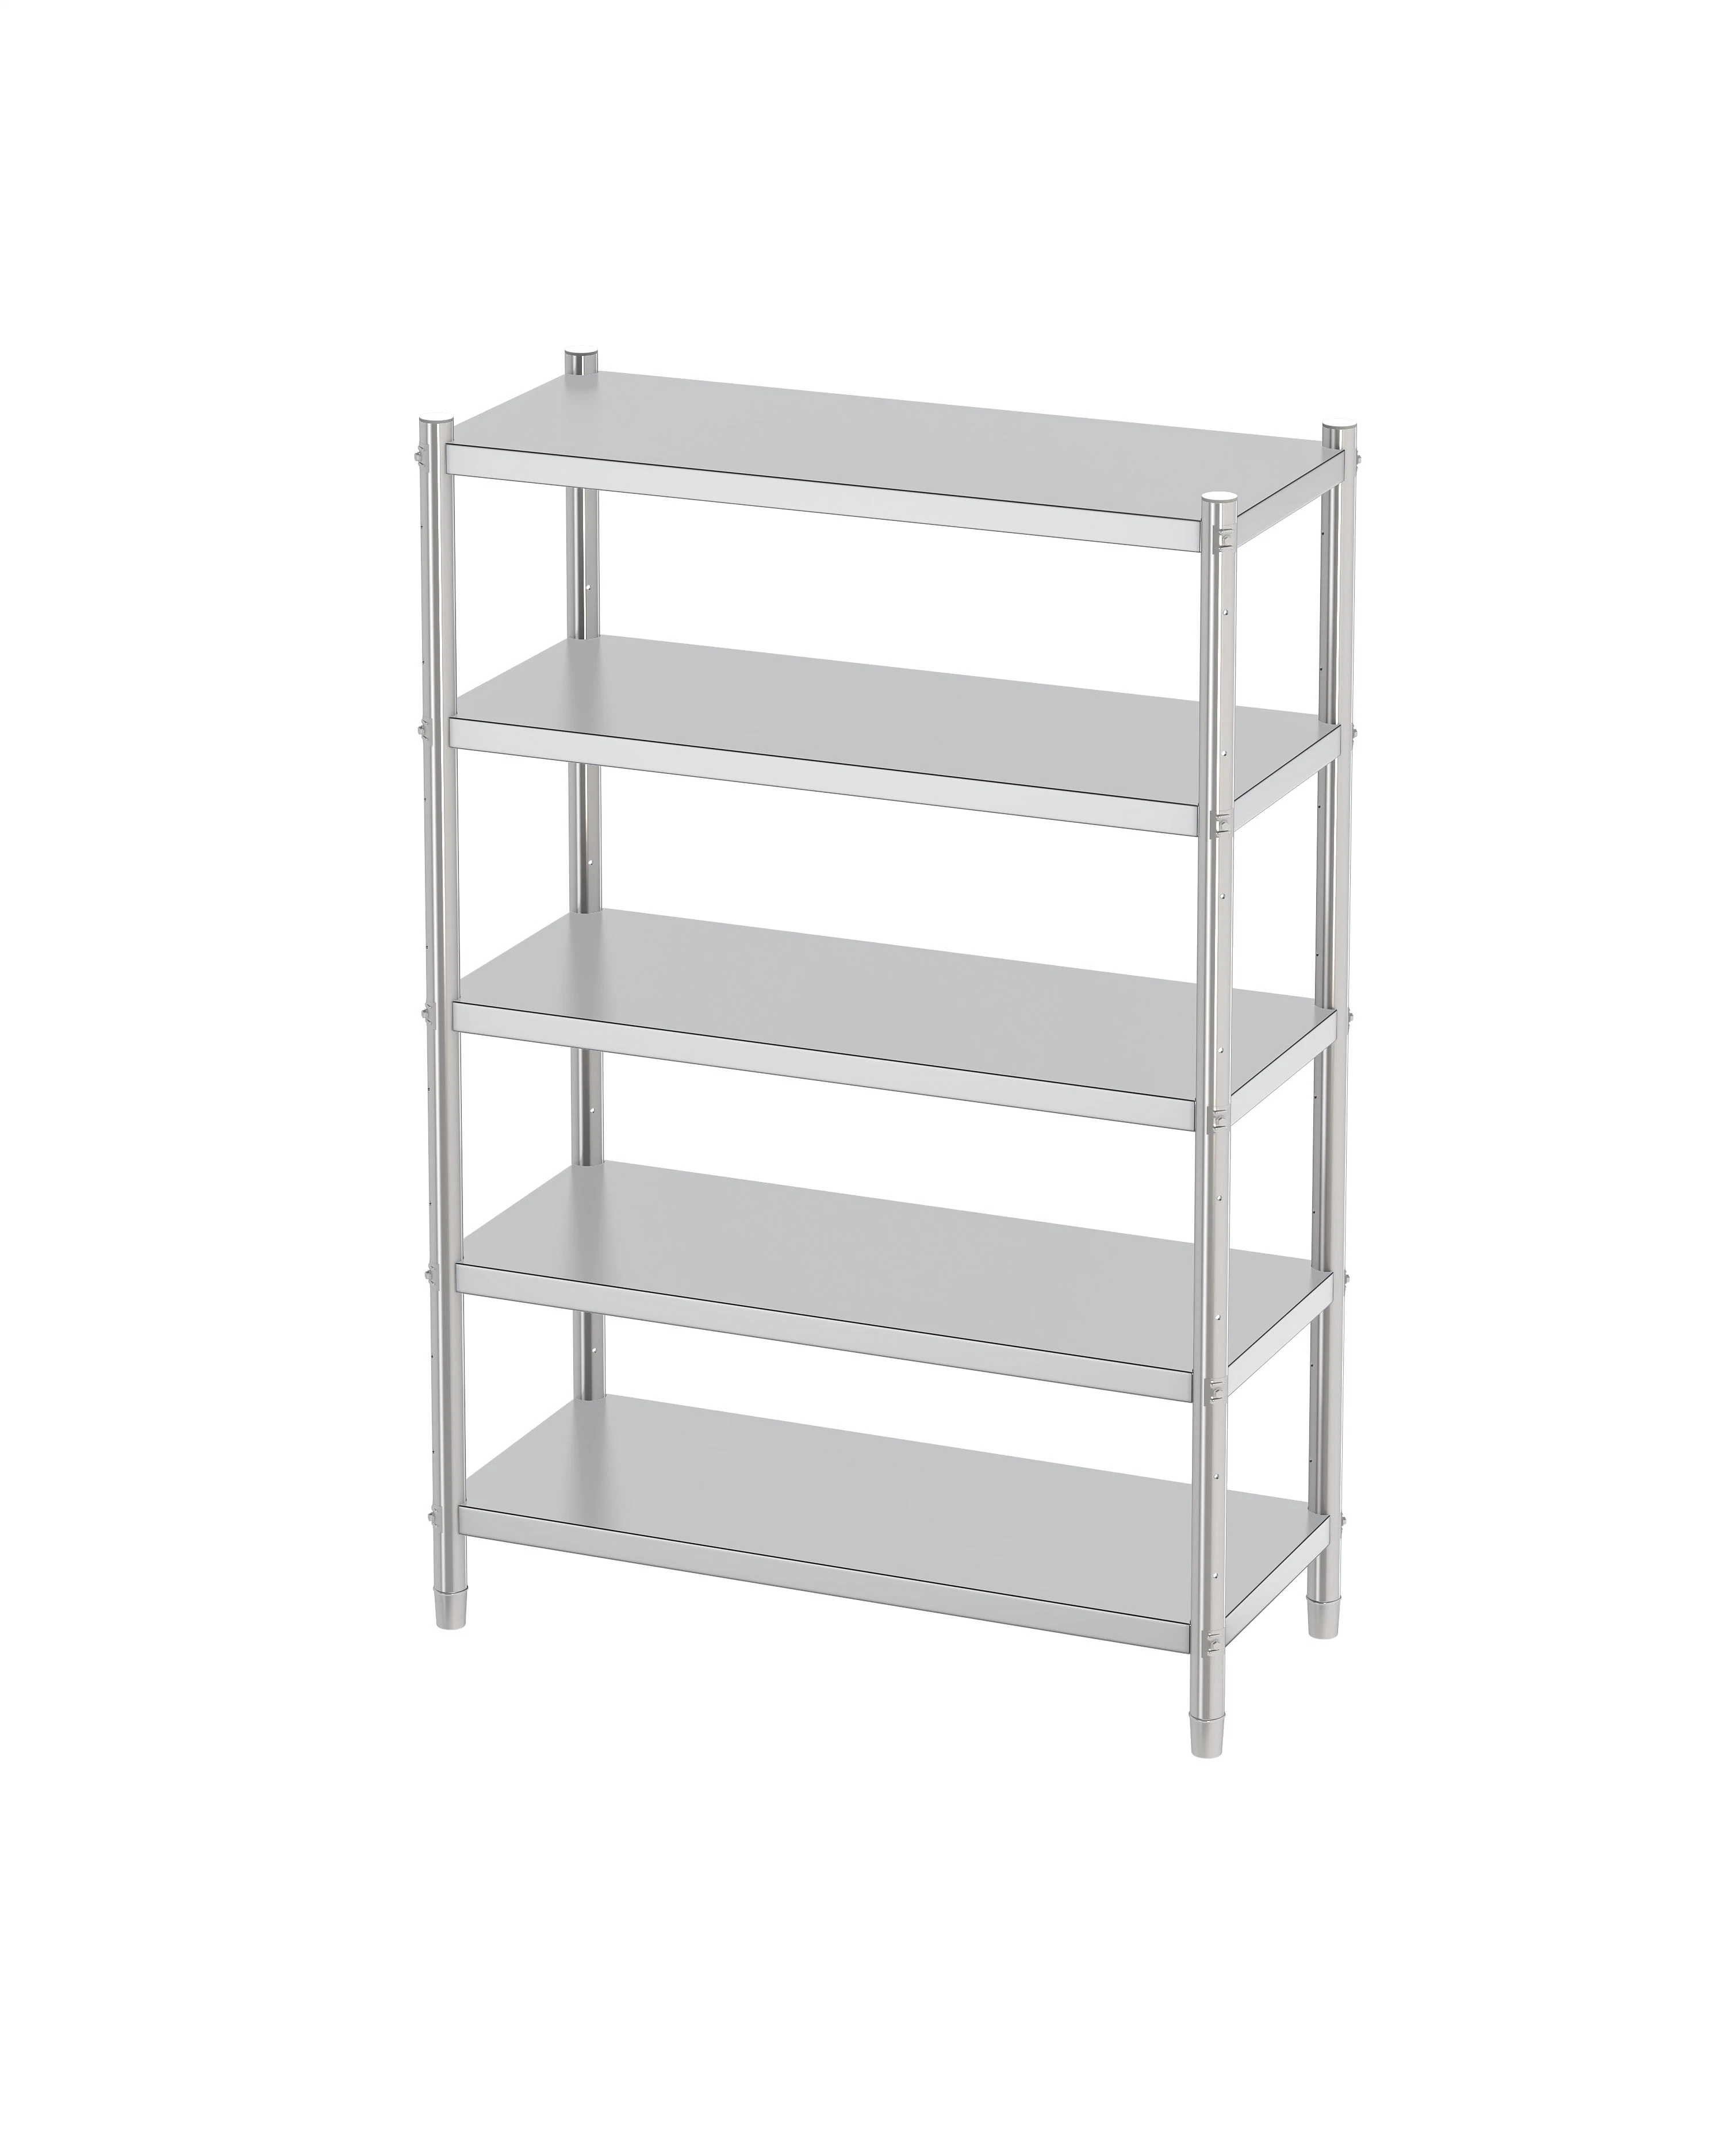 hot sales 201 304 stainless steel Kitchen Storage Shelf for restaurant use